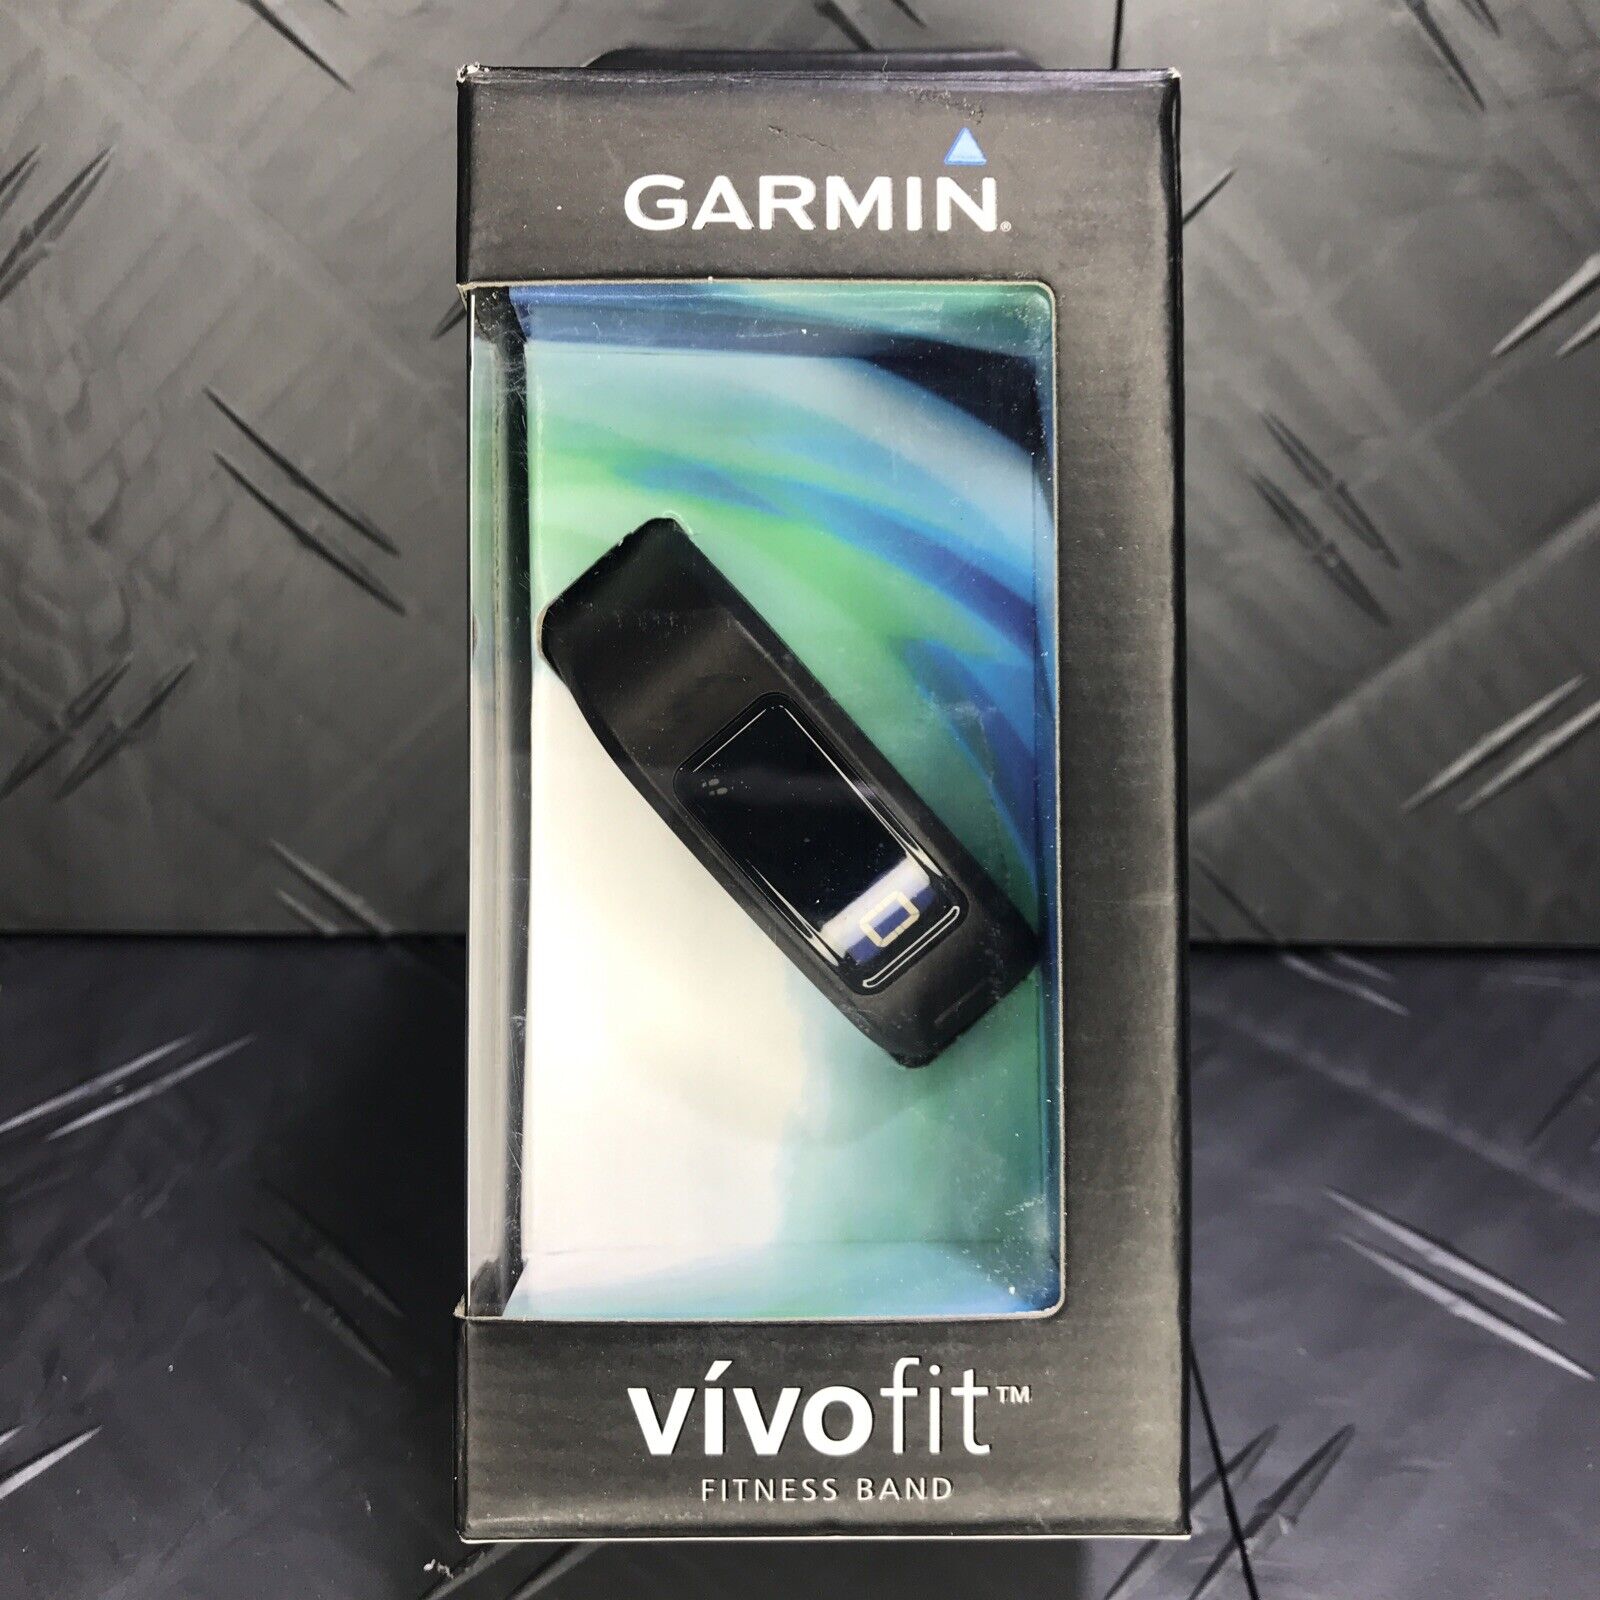 Garmin Vivofit New Fitness Activity Tracker Band Garmin 010-01225-00